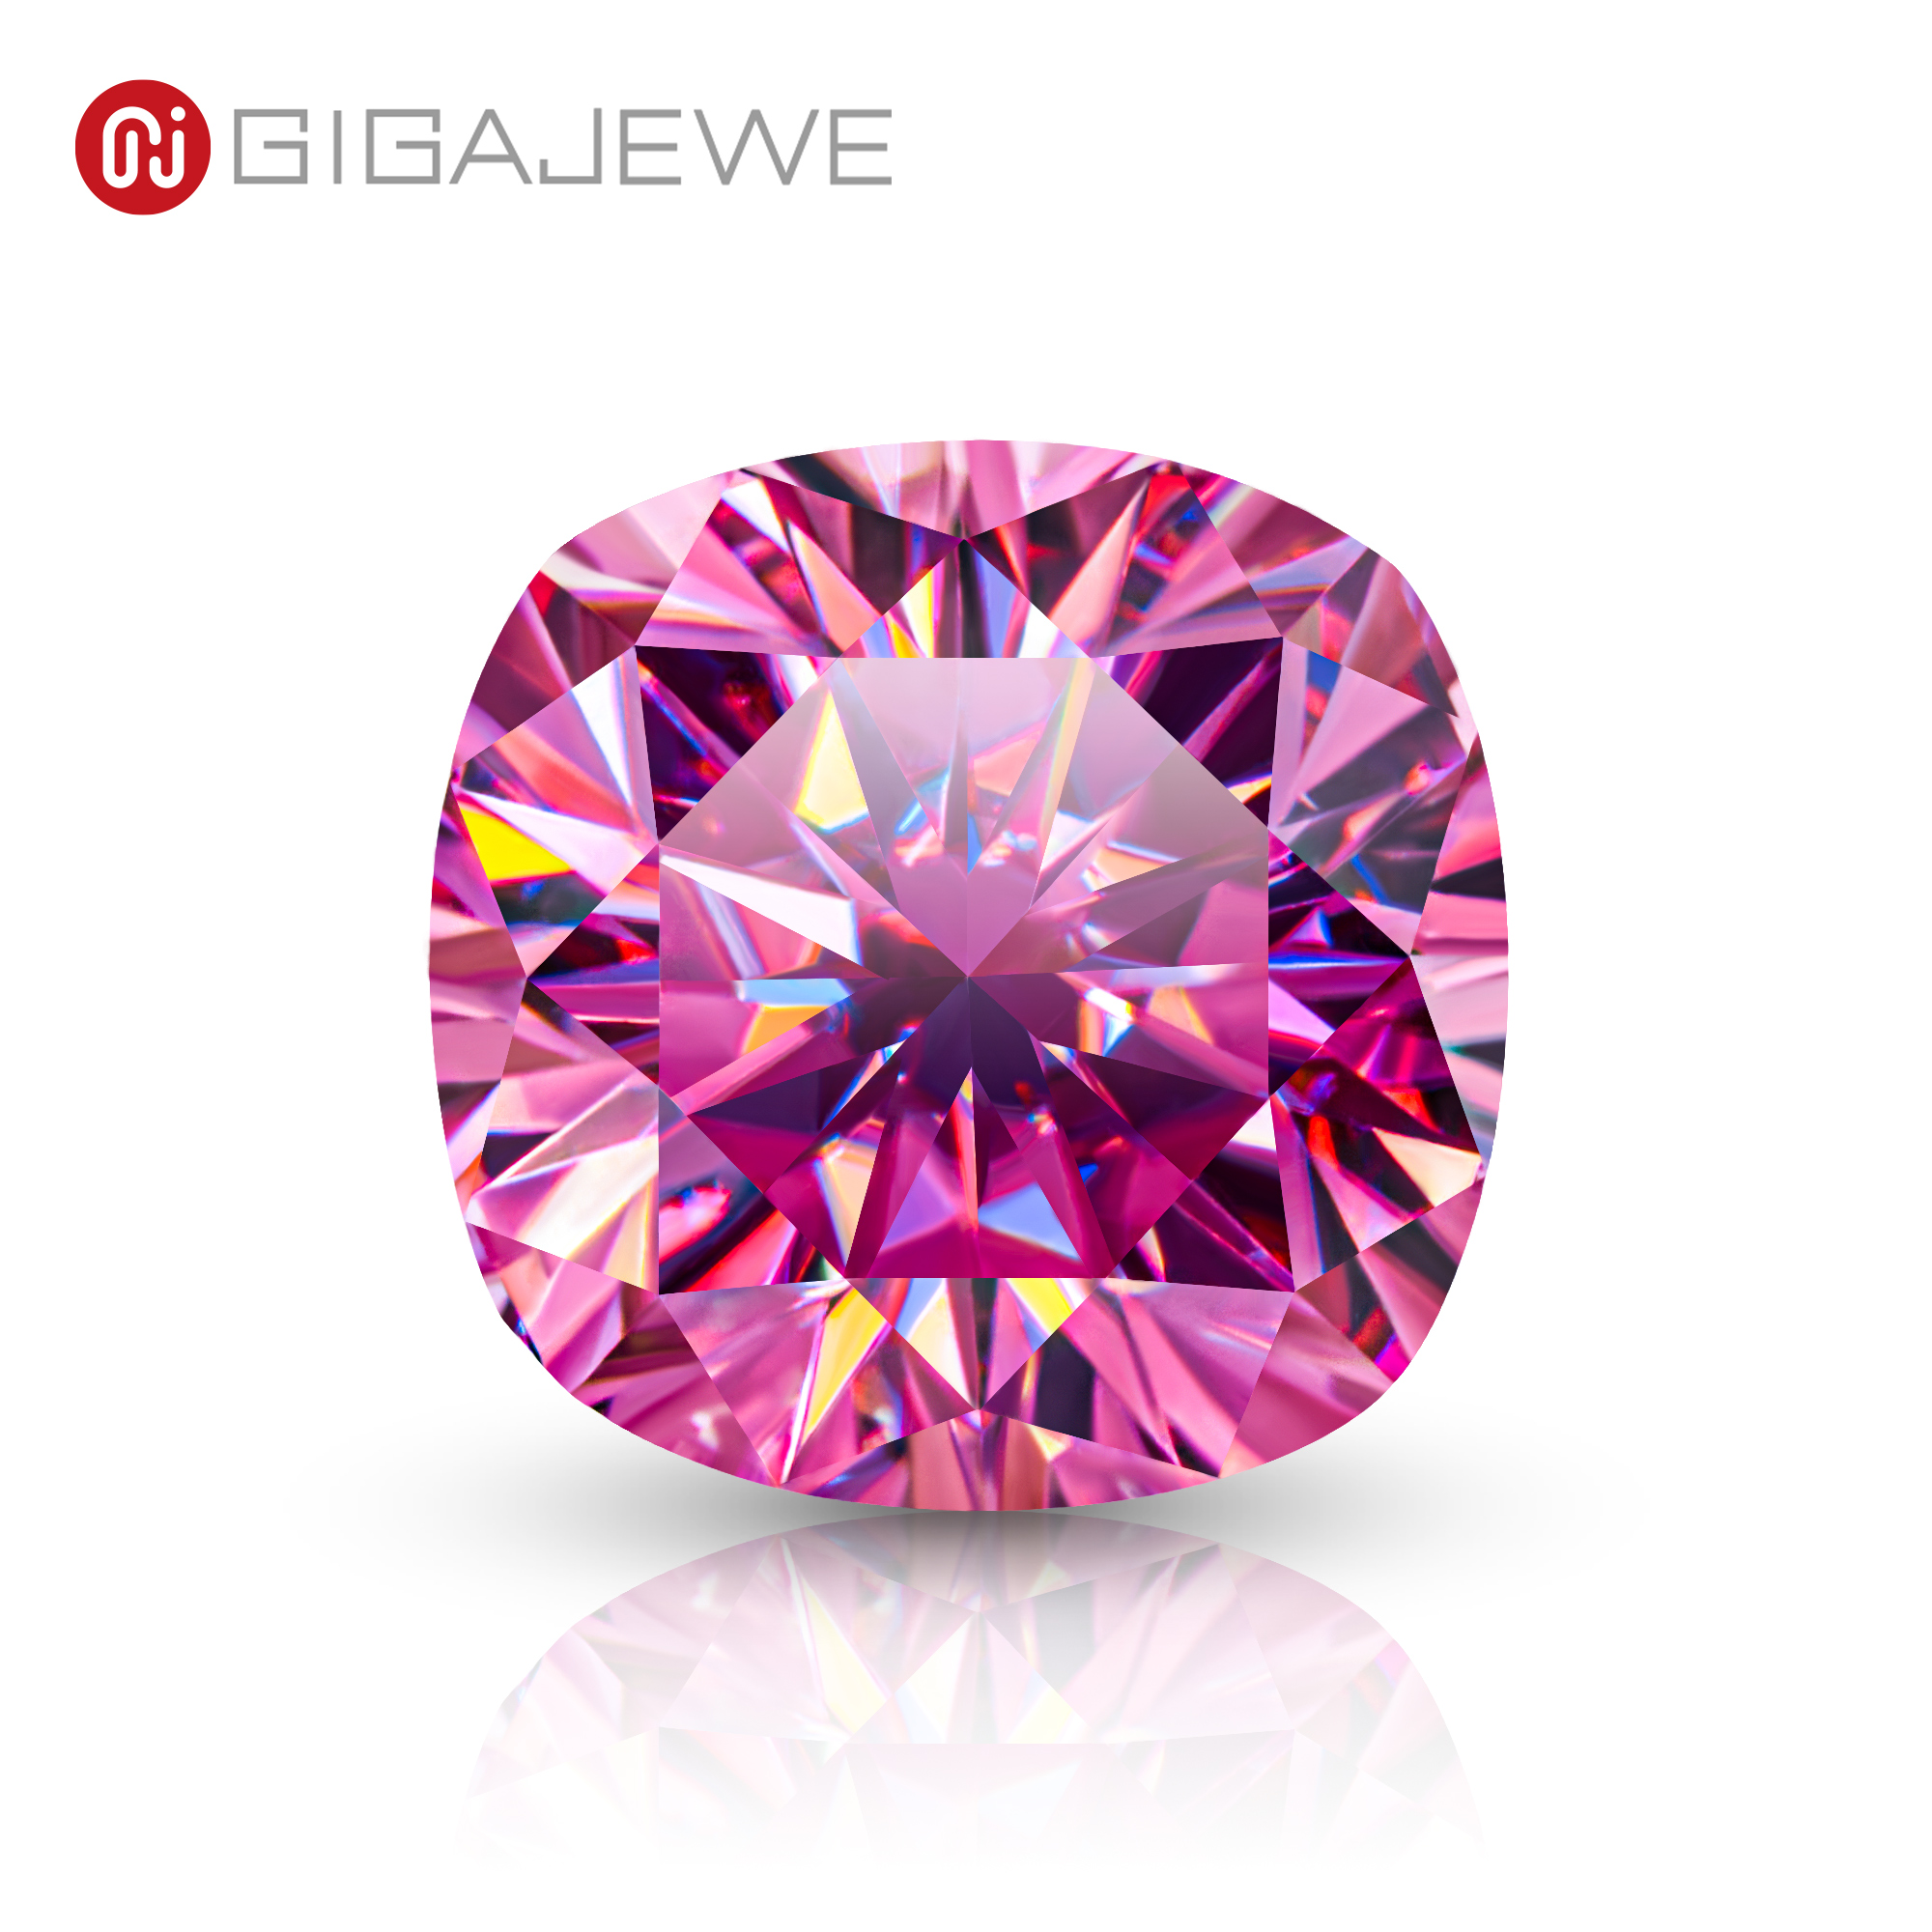 GIGAJEWE 莫桑石手切垫 红色 粉色 VVS1 优质宝石 裸钻测试通过 宝石用于珠宝制作